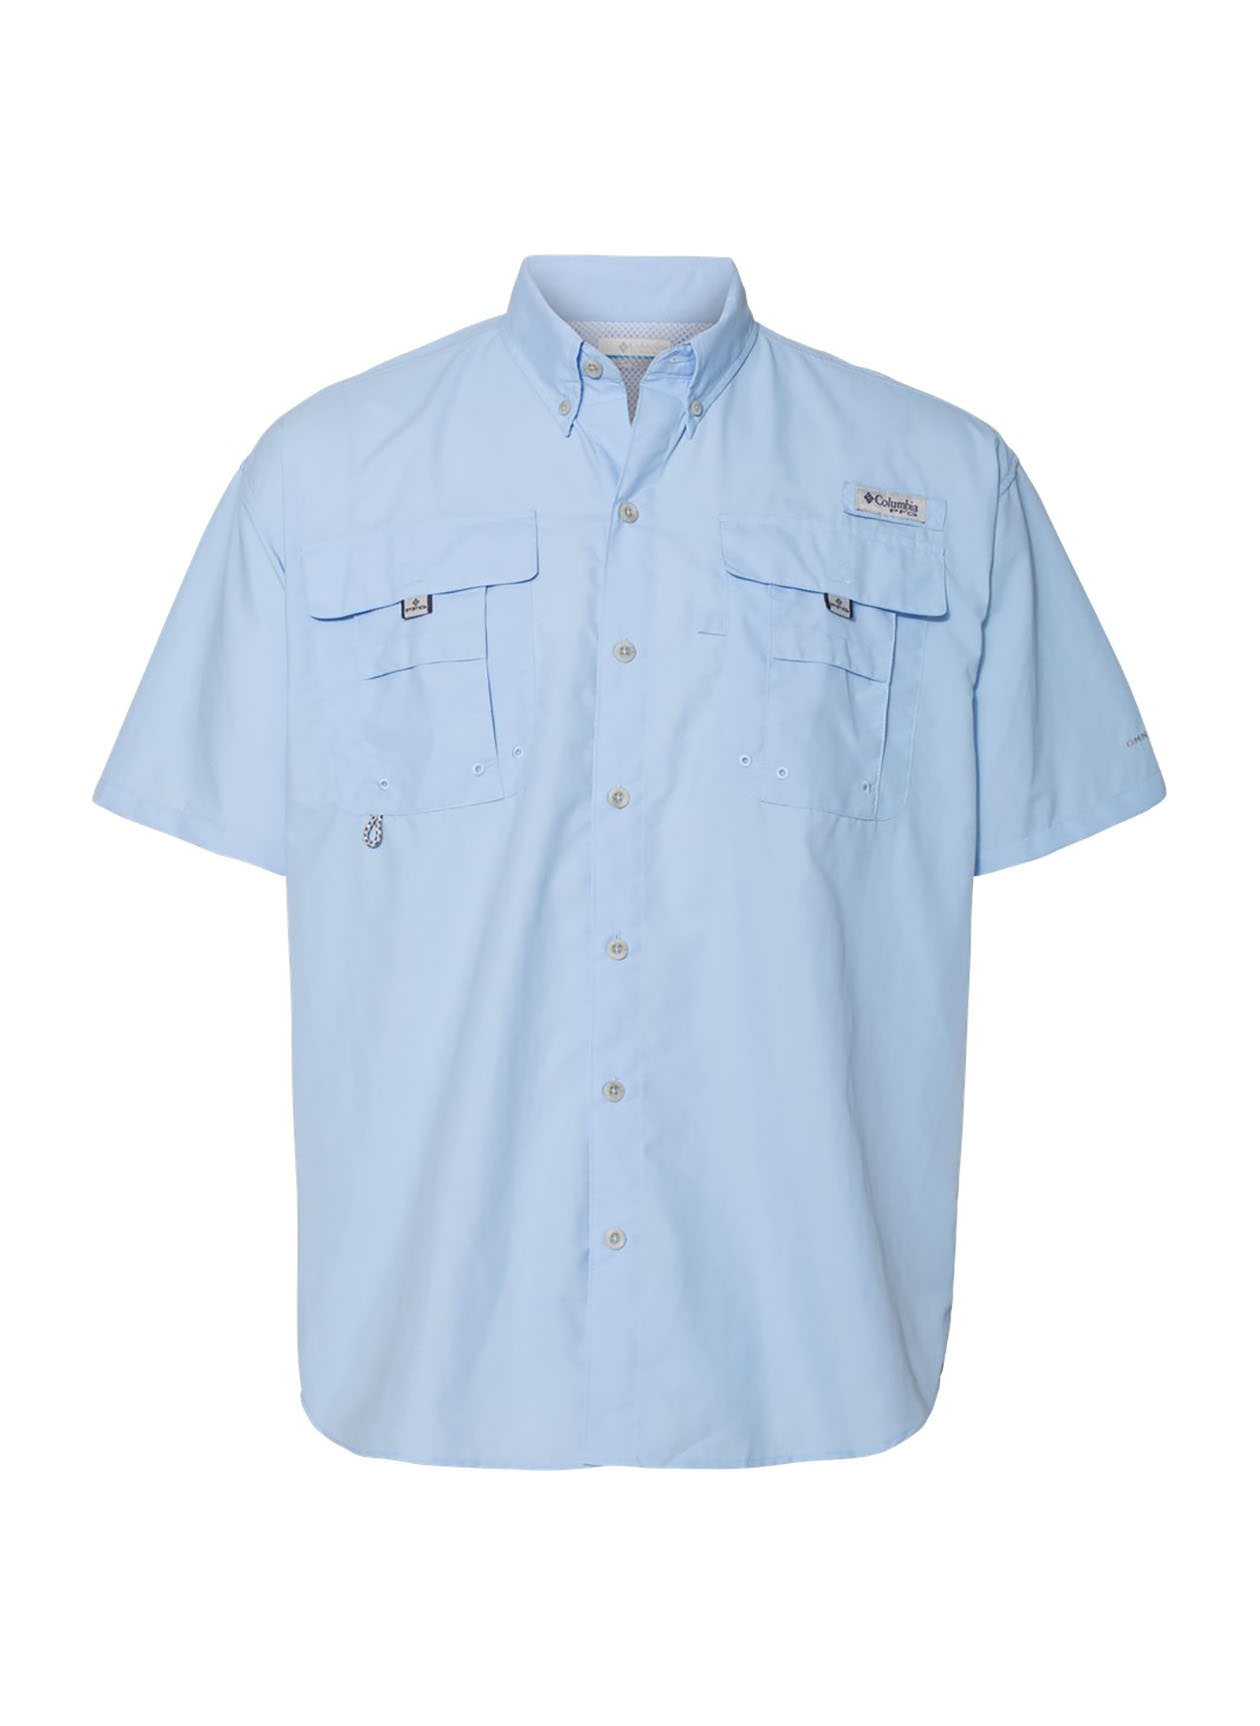 Columbia Men's Sail PFG Bahama II Short-Sleeve Shirt